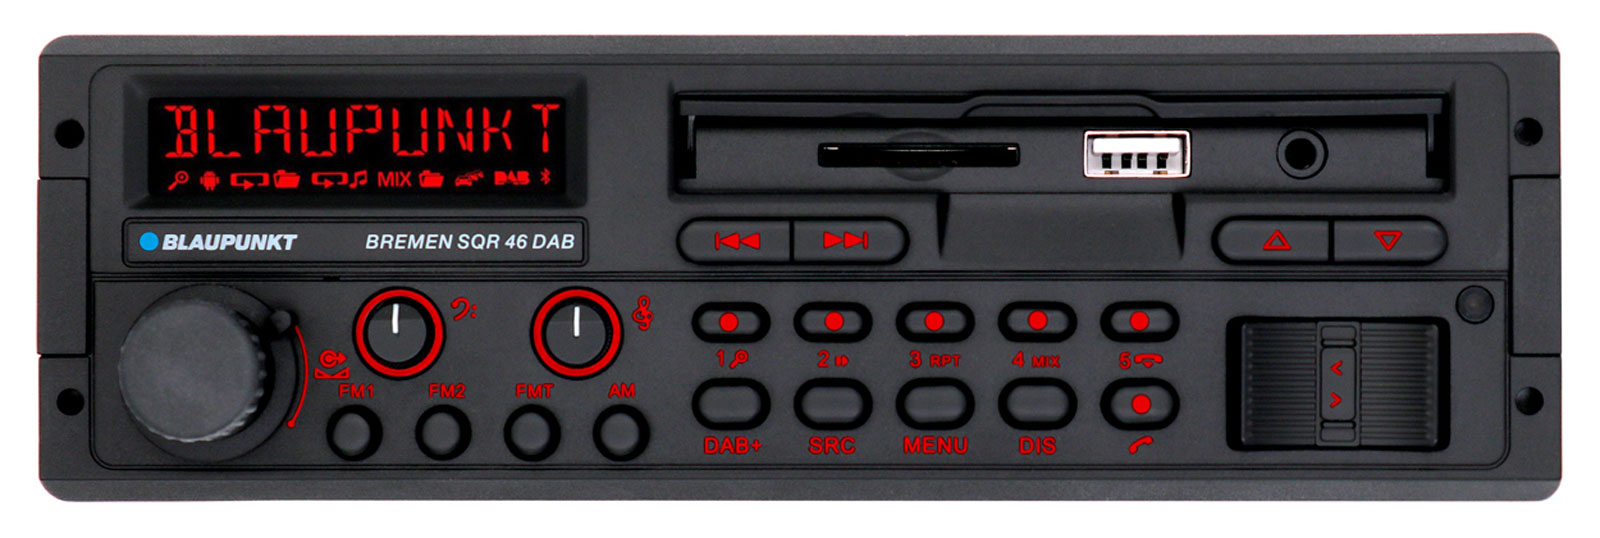 Details zu  Blaupunkt SD Lenkrad USB Bluetooth DAB Autoradio für Fiat 500 ab 2007 perlgrau b Aktie mit niedrigem Preis